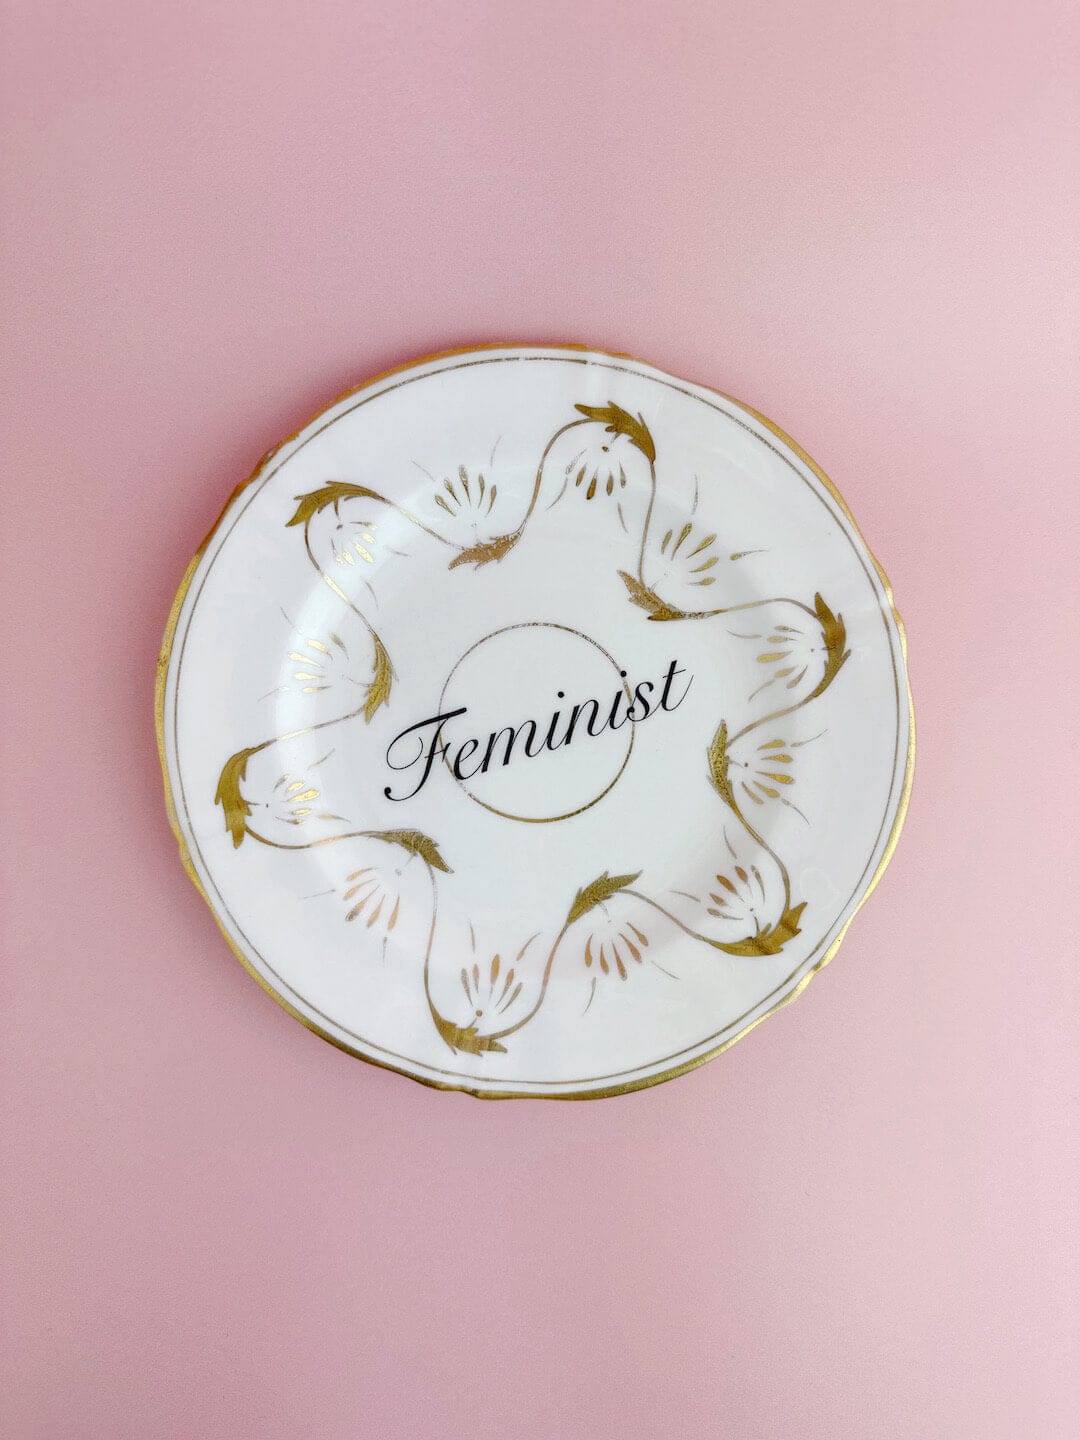 Beau & Badger Ceramics #92 Decorative Wall Plate - Feminist (multiple designs)